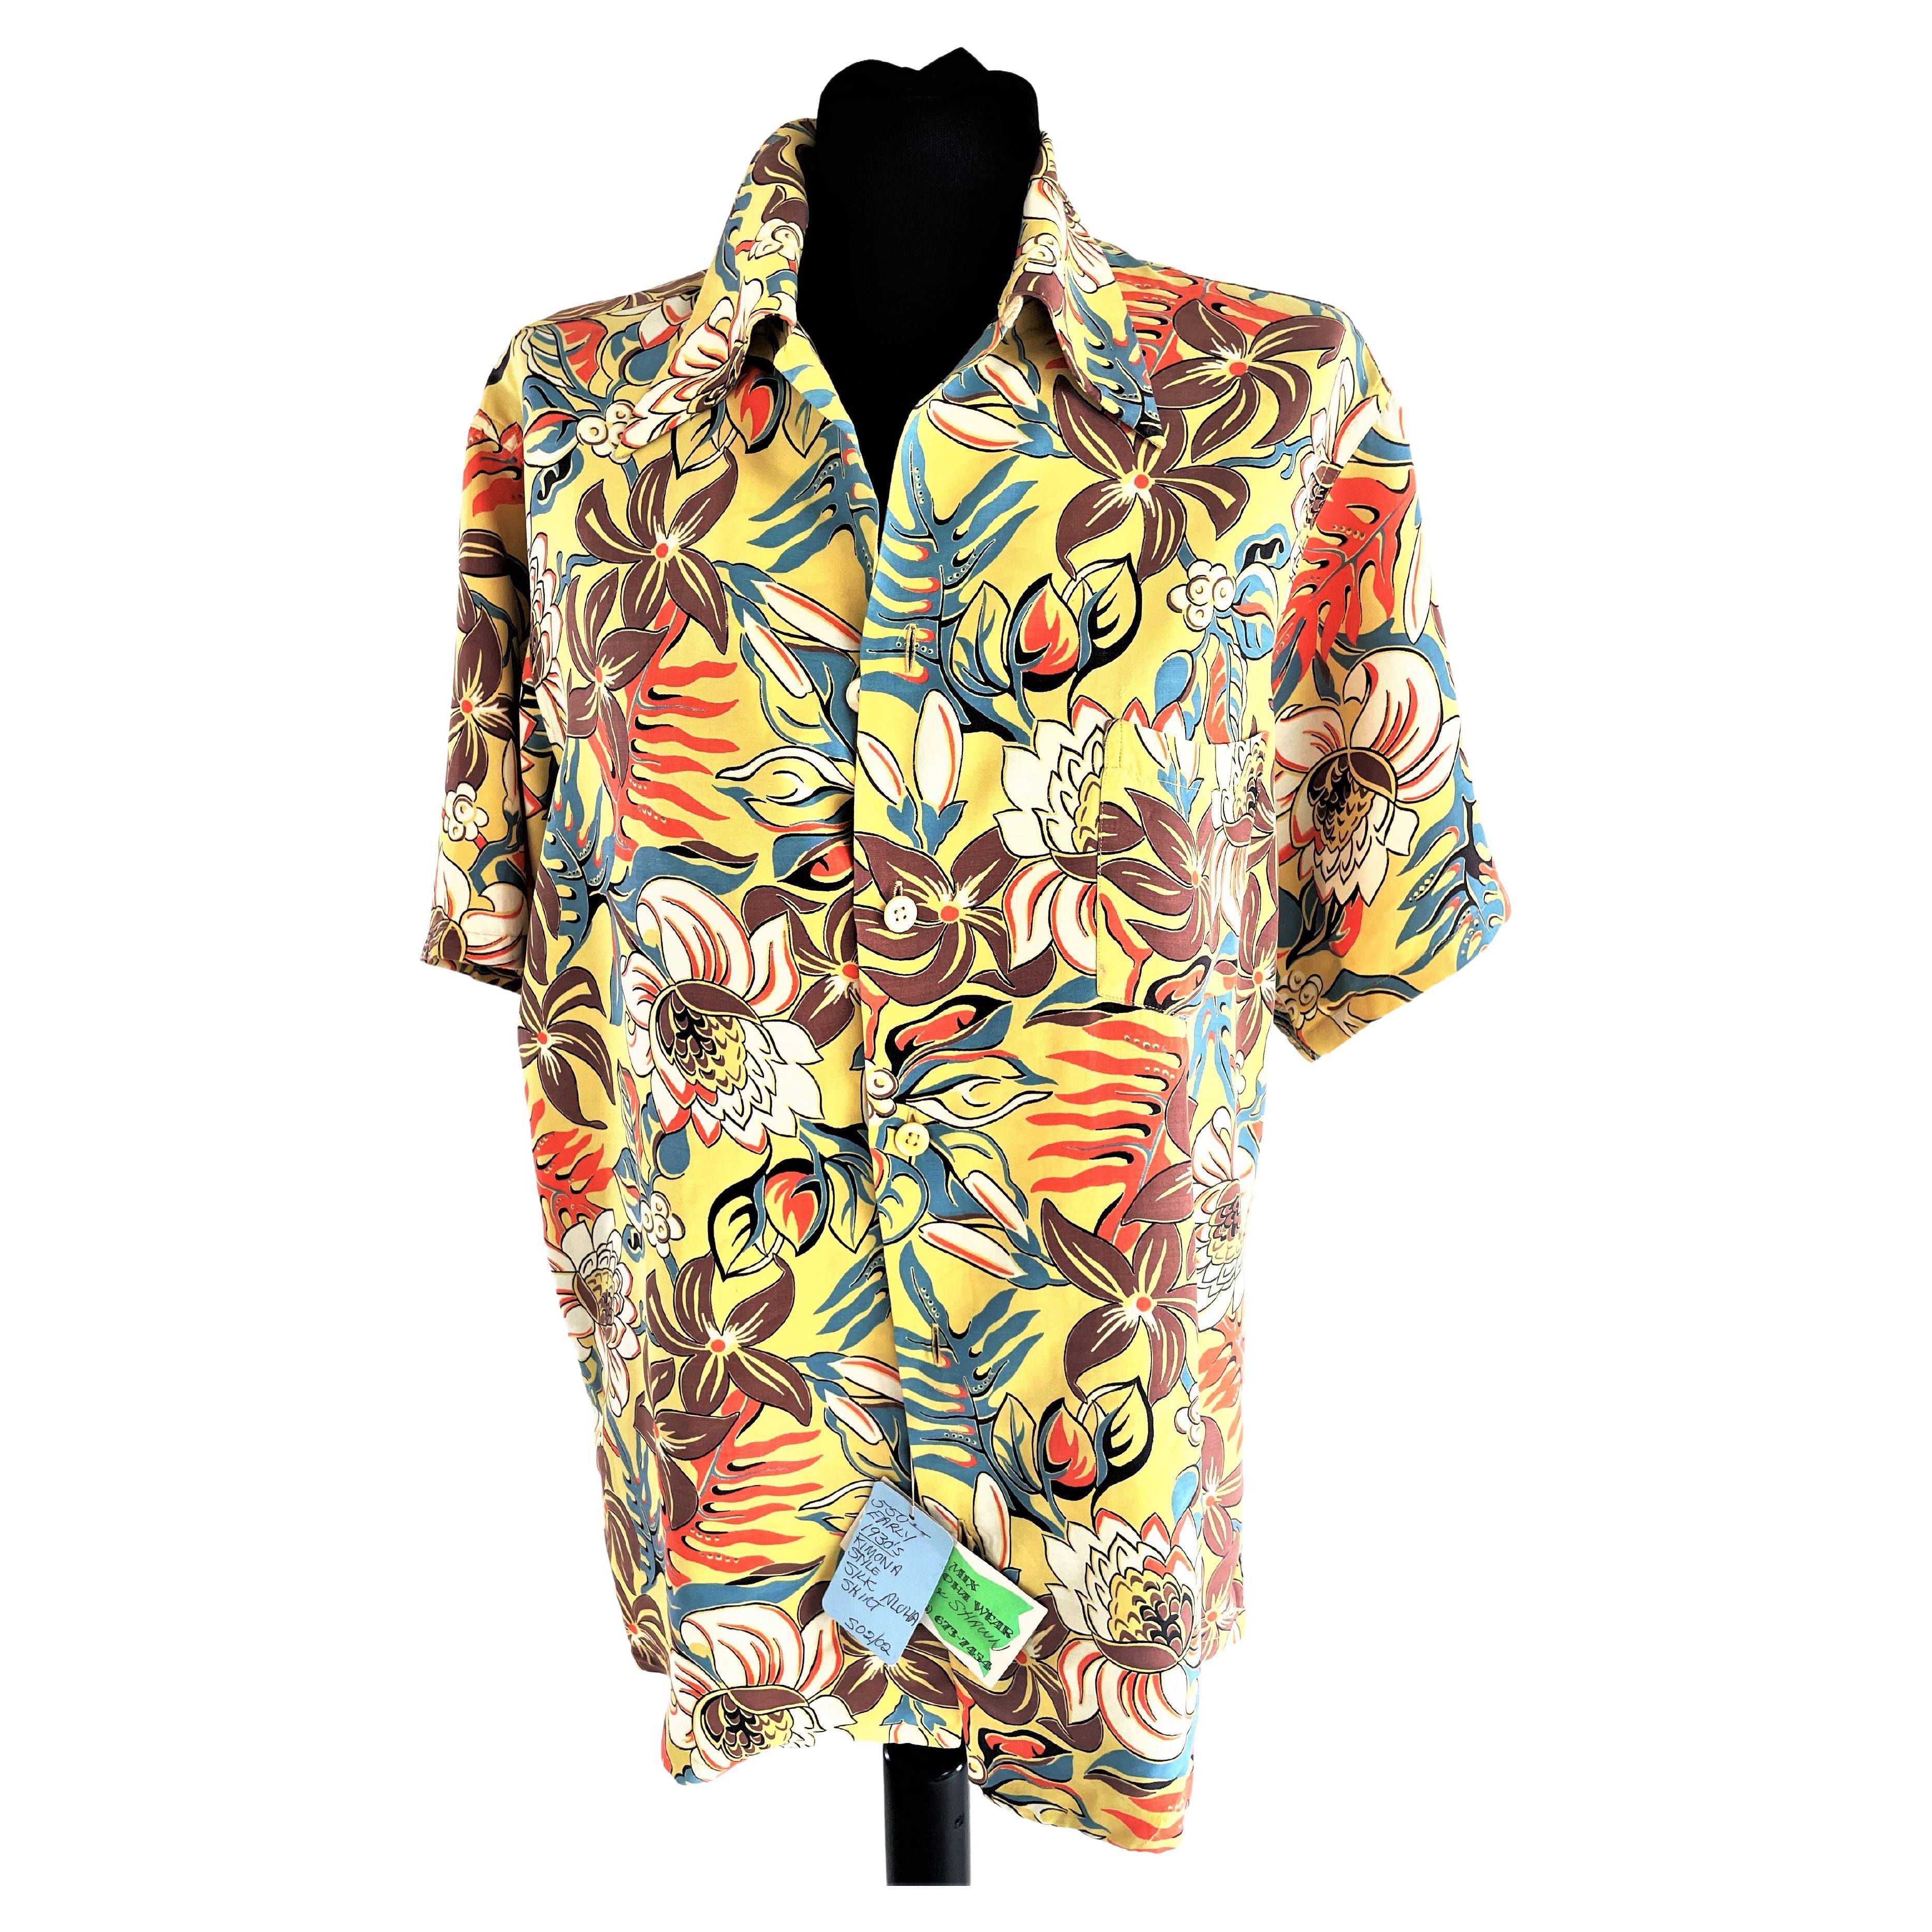 Original ALOHA vintage shirt complex 1940s Rayon, Hawaiian botanical by Jantzen 